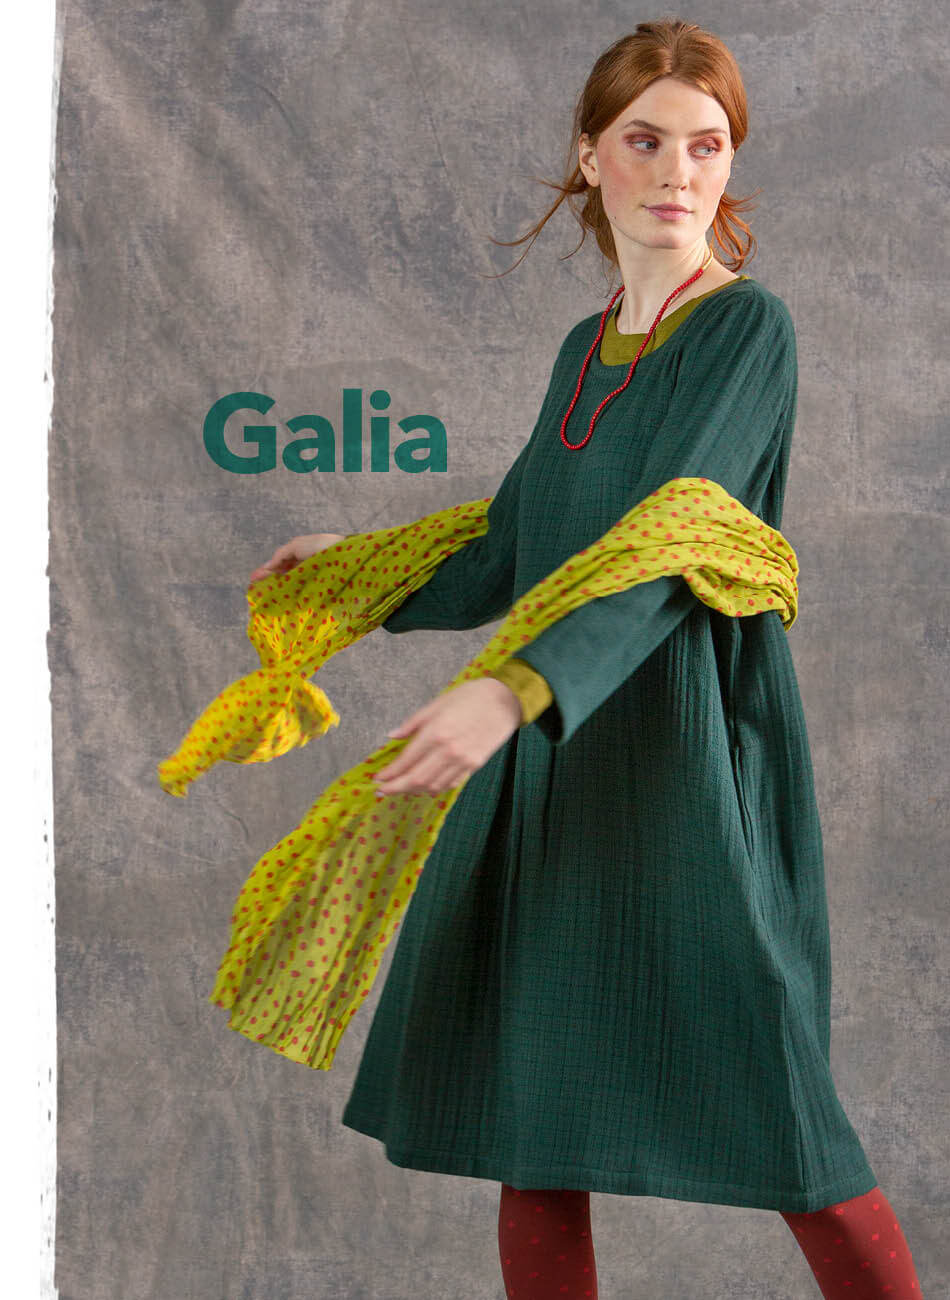 “Galia” woven organic cotton dress